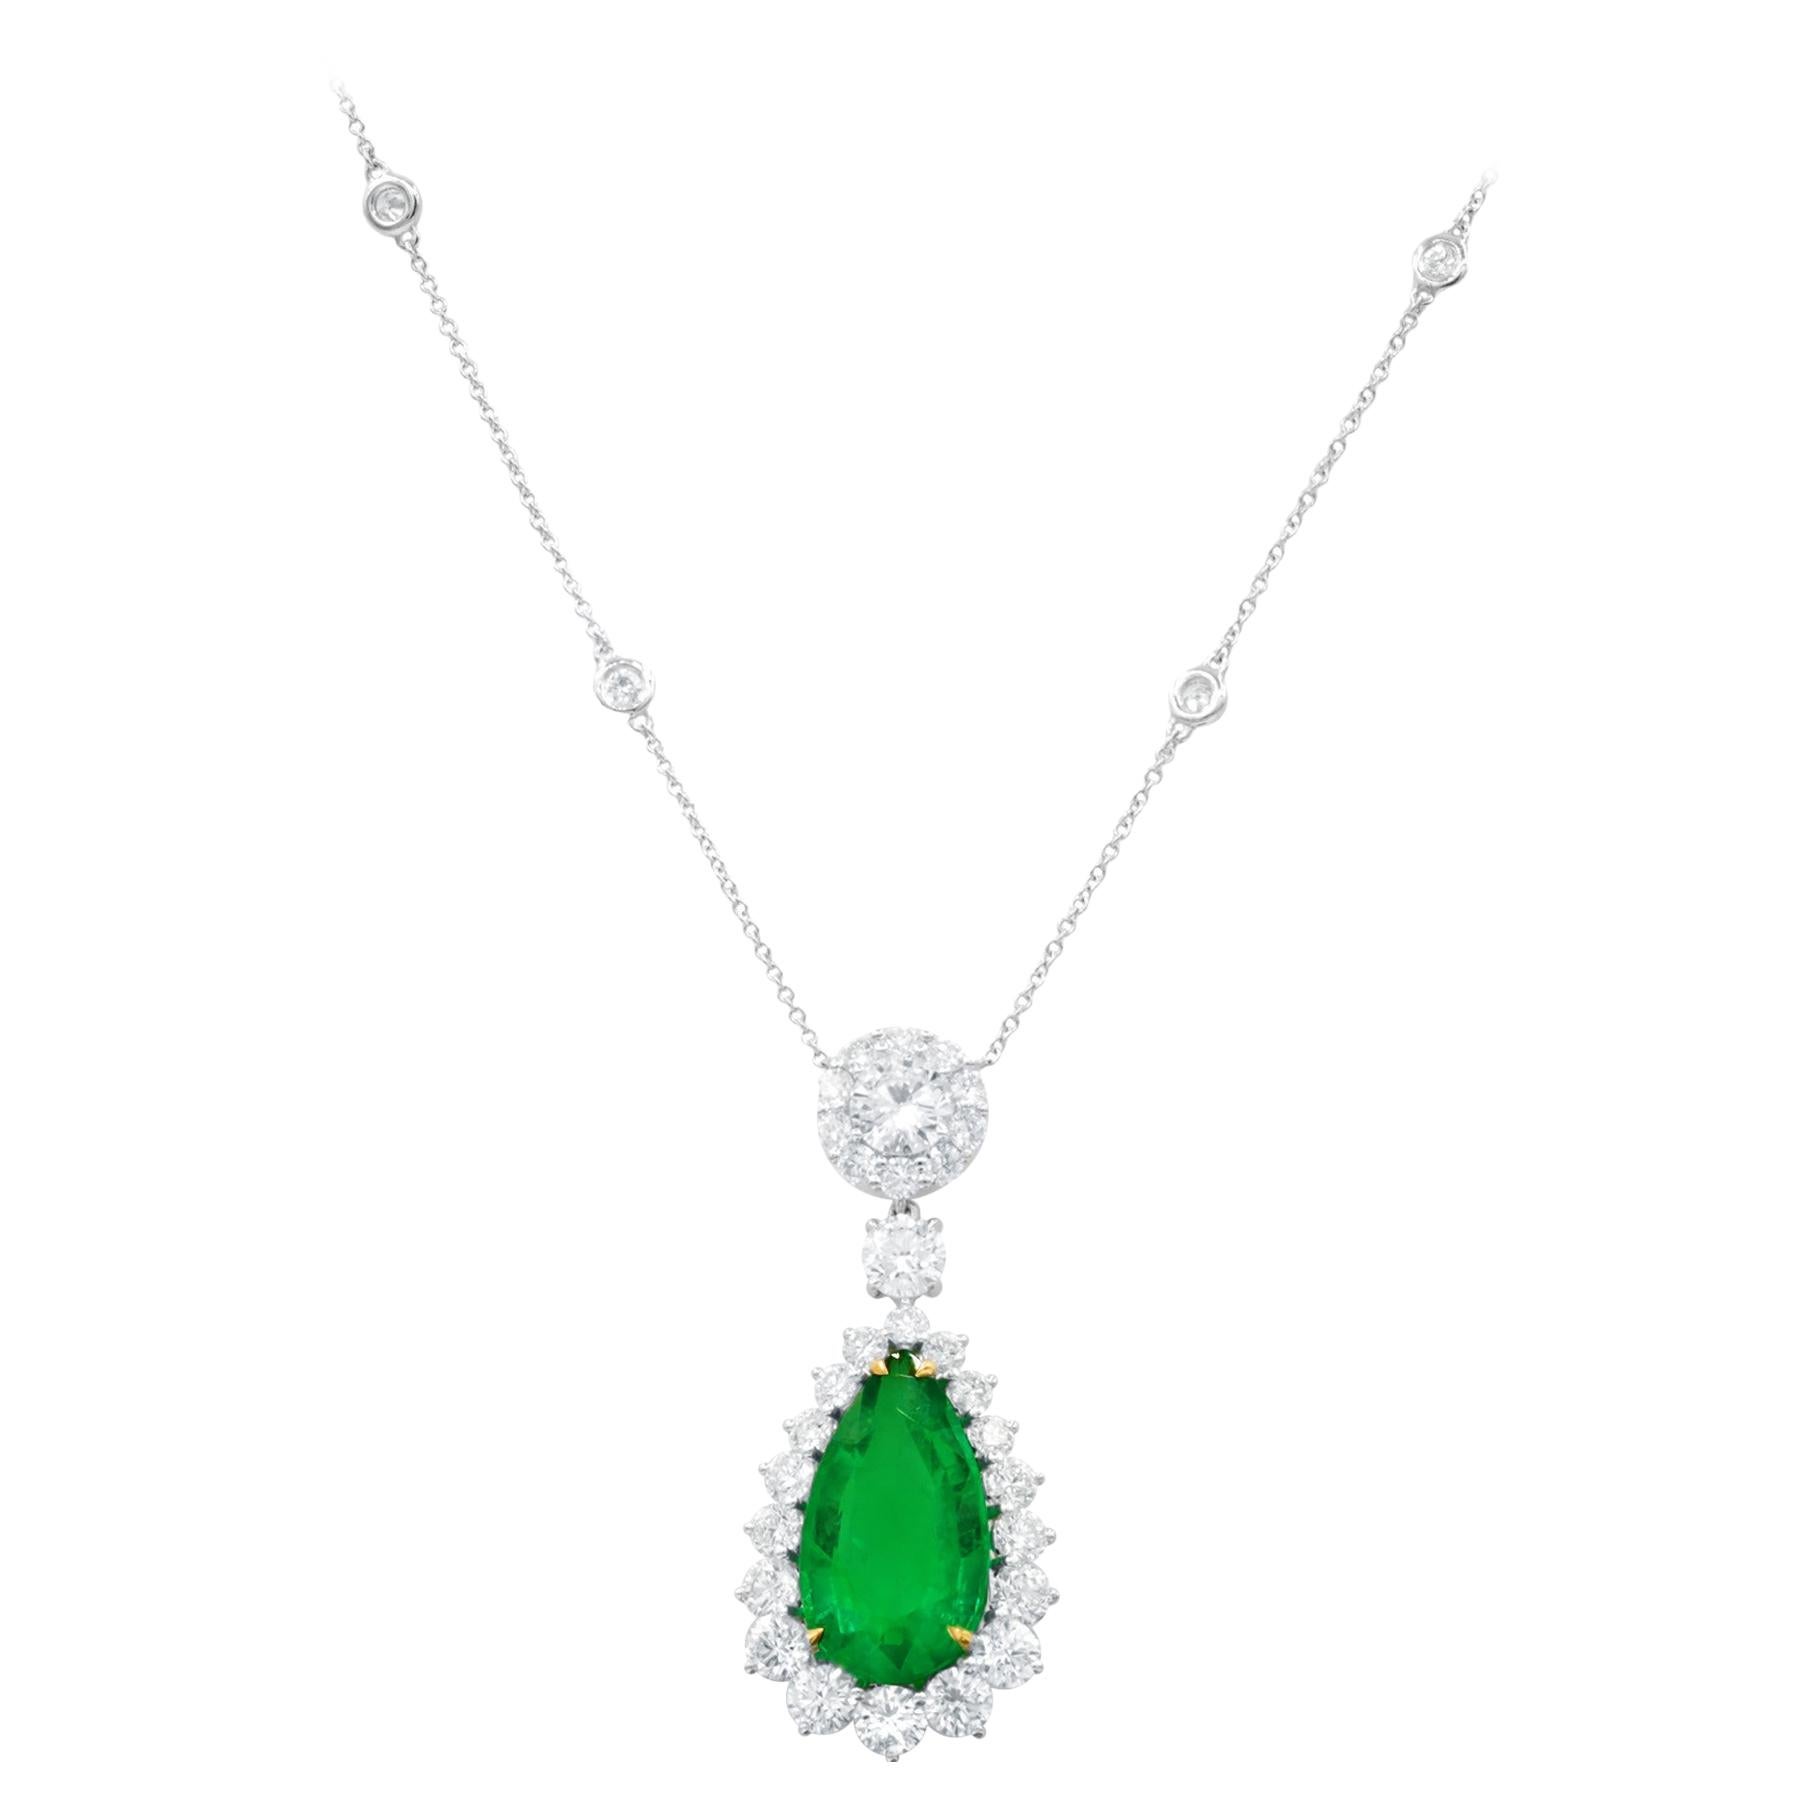 Certified 8.58 Carat Green Emerald Pendant